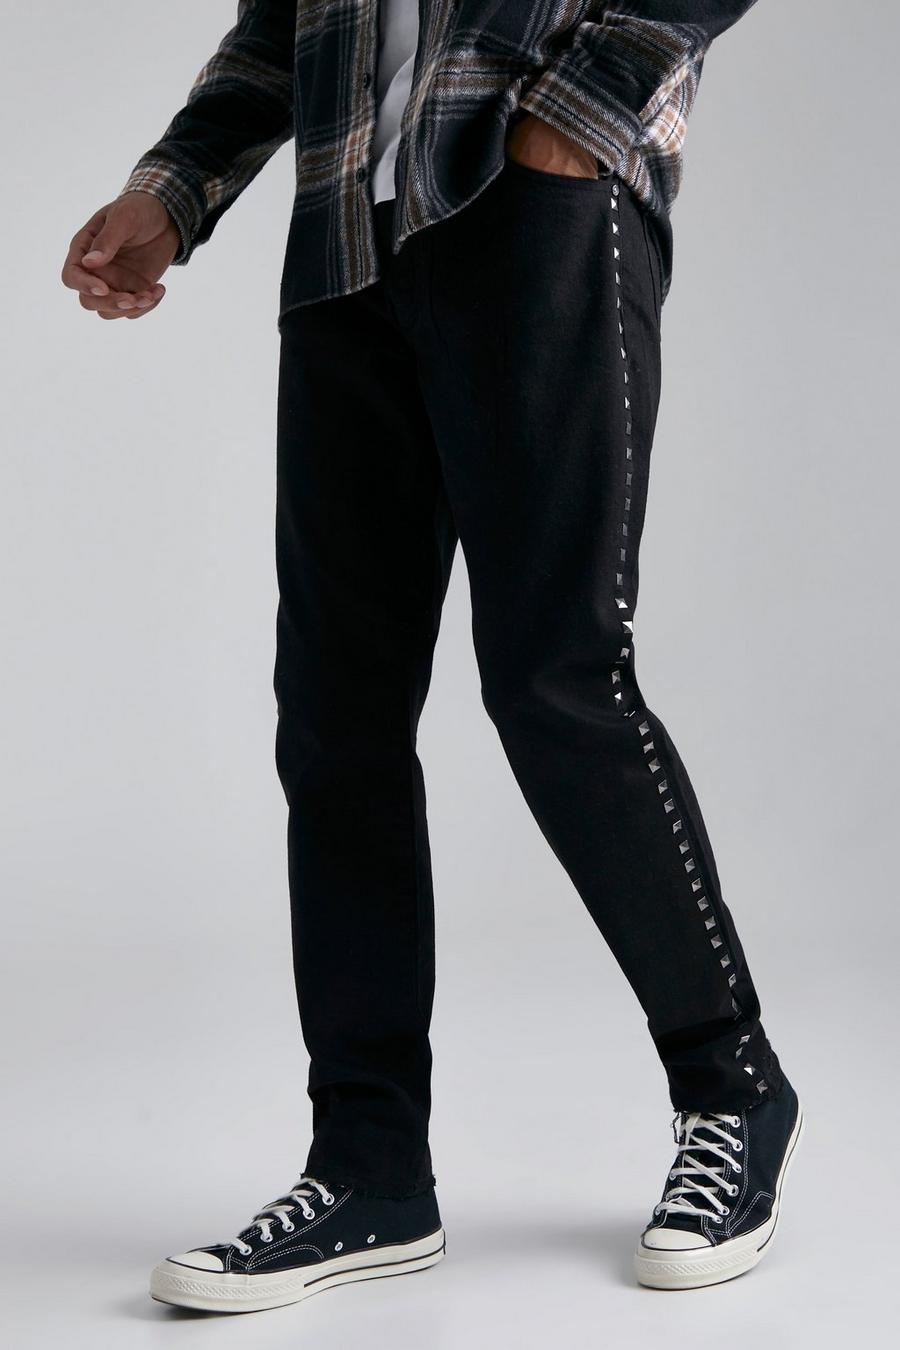 Jeans Tall Slim Fit in denim rigido con borchie, True black image number 1